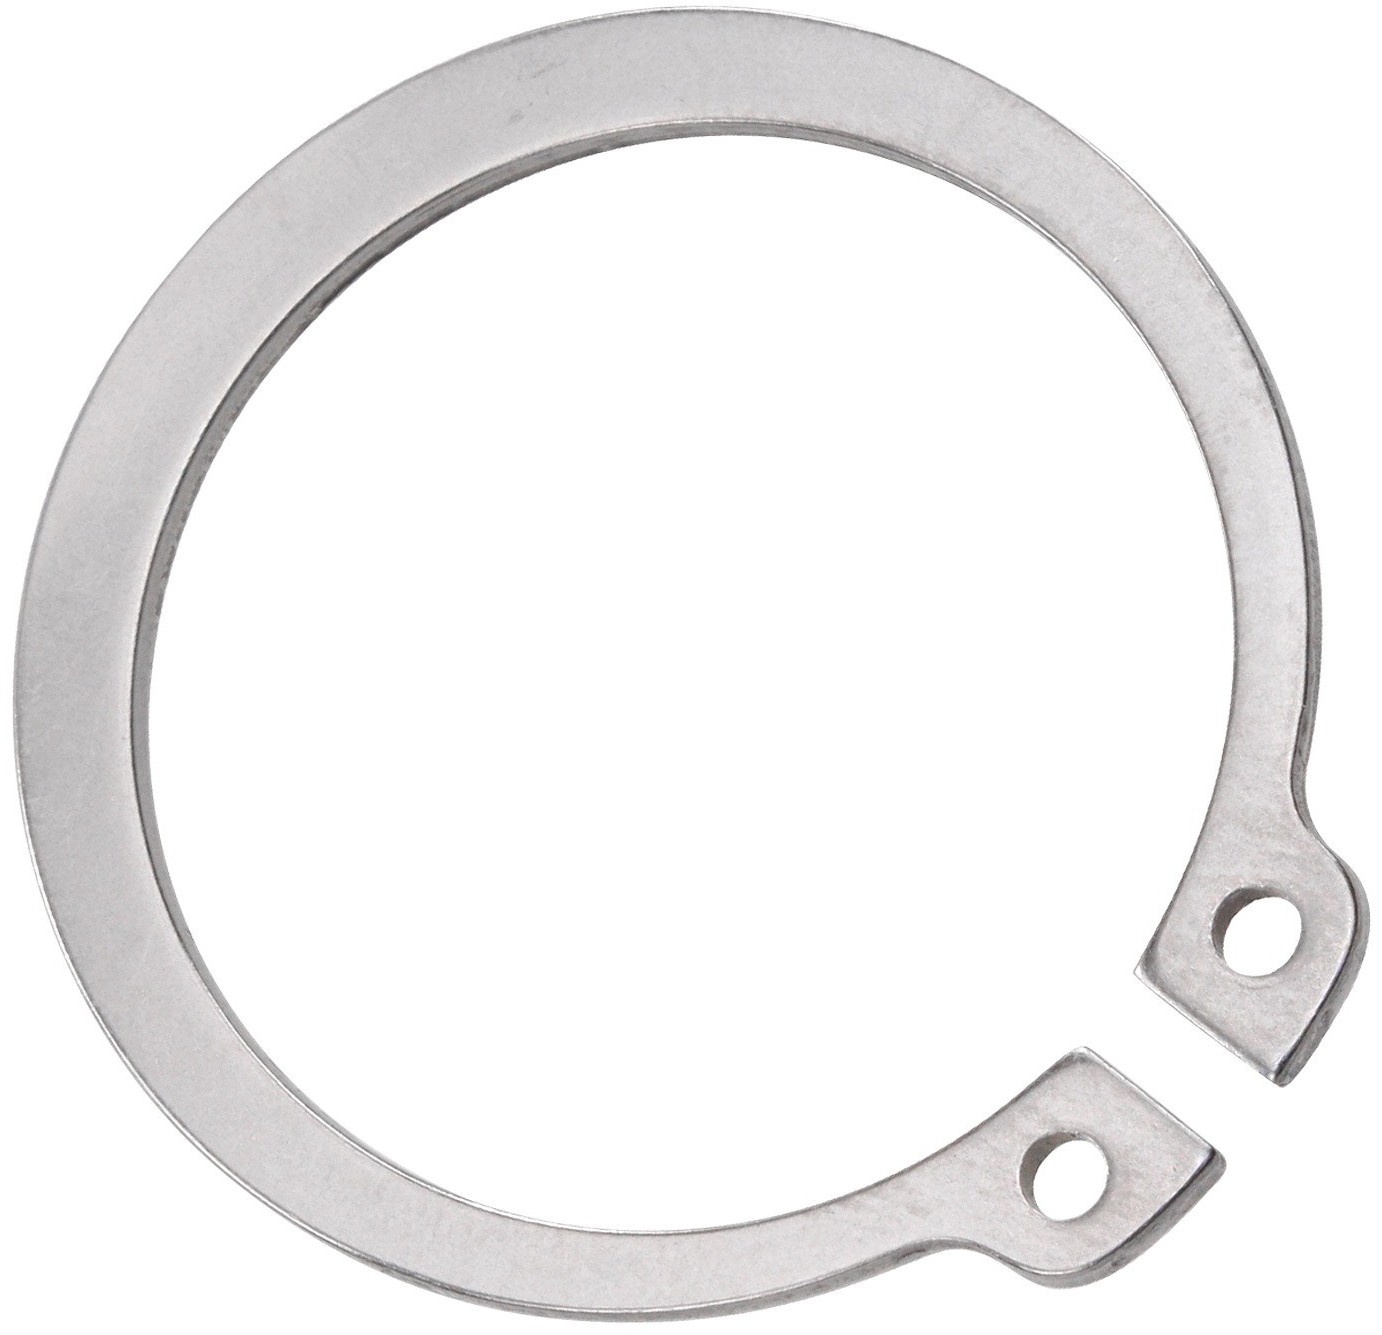 Кольцо стопорное наружное 190х4 DIN 471, нержавеющая сталь 1.4122 (А2) - фото